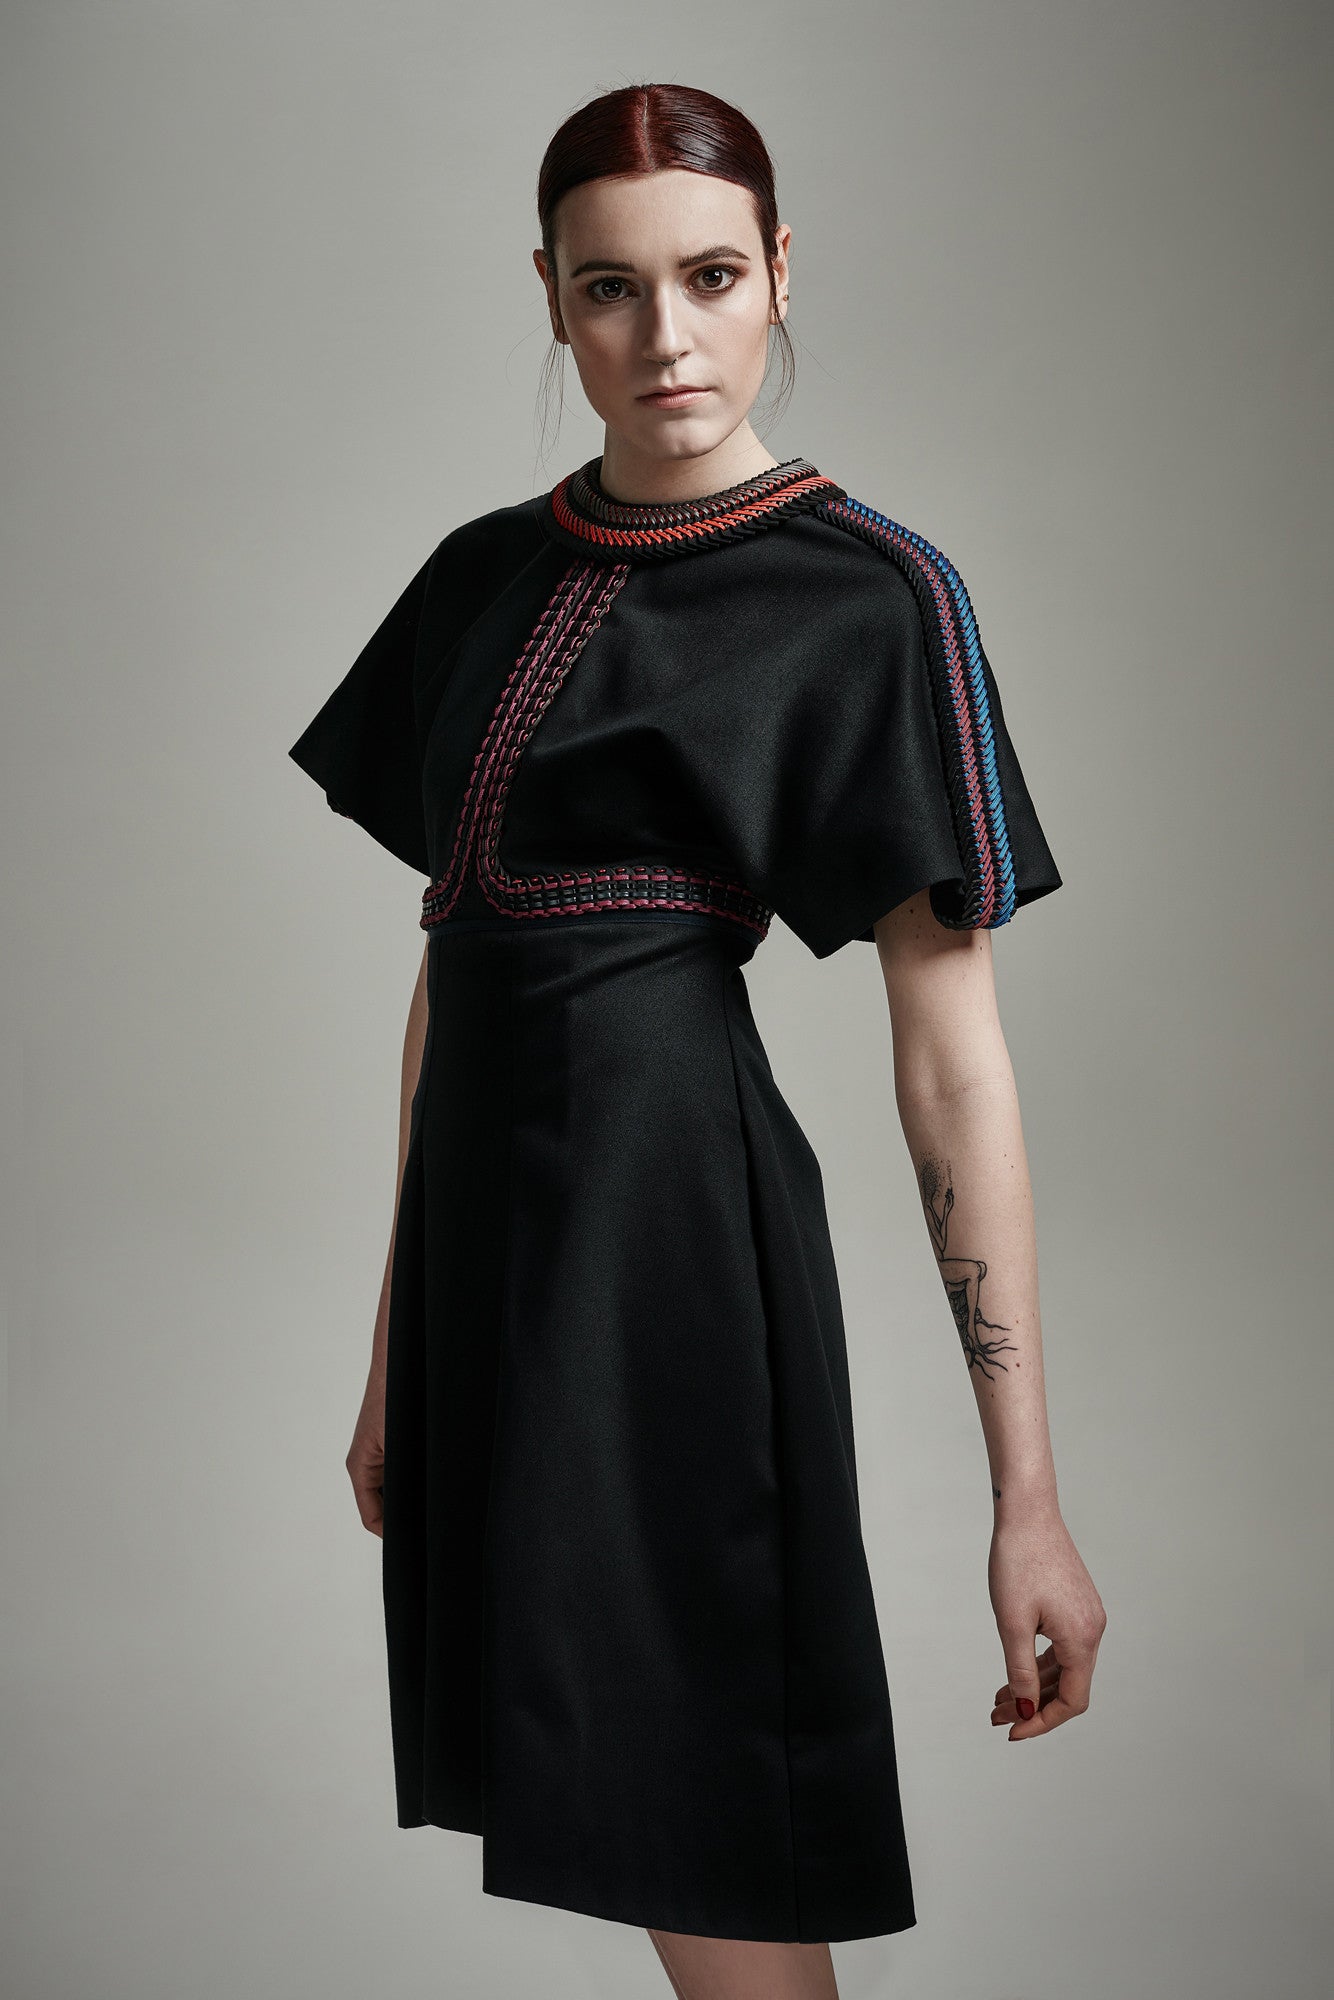 Navy Cotton and Leather "Sylvia" Samurai Dress